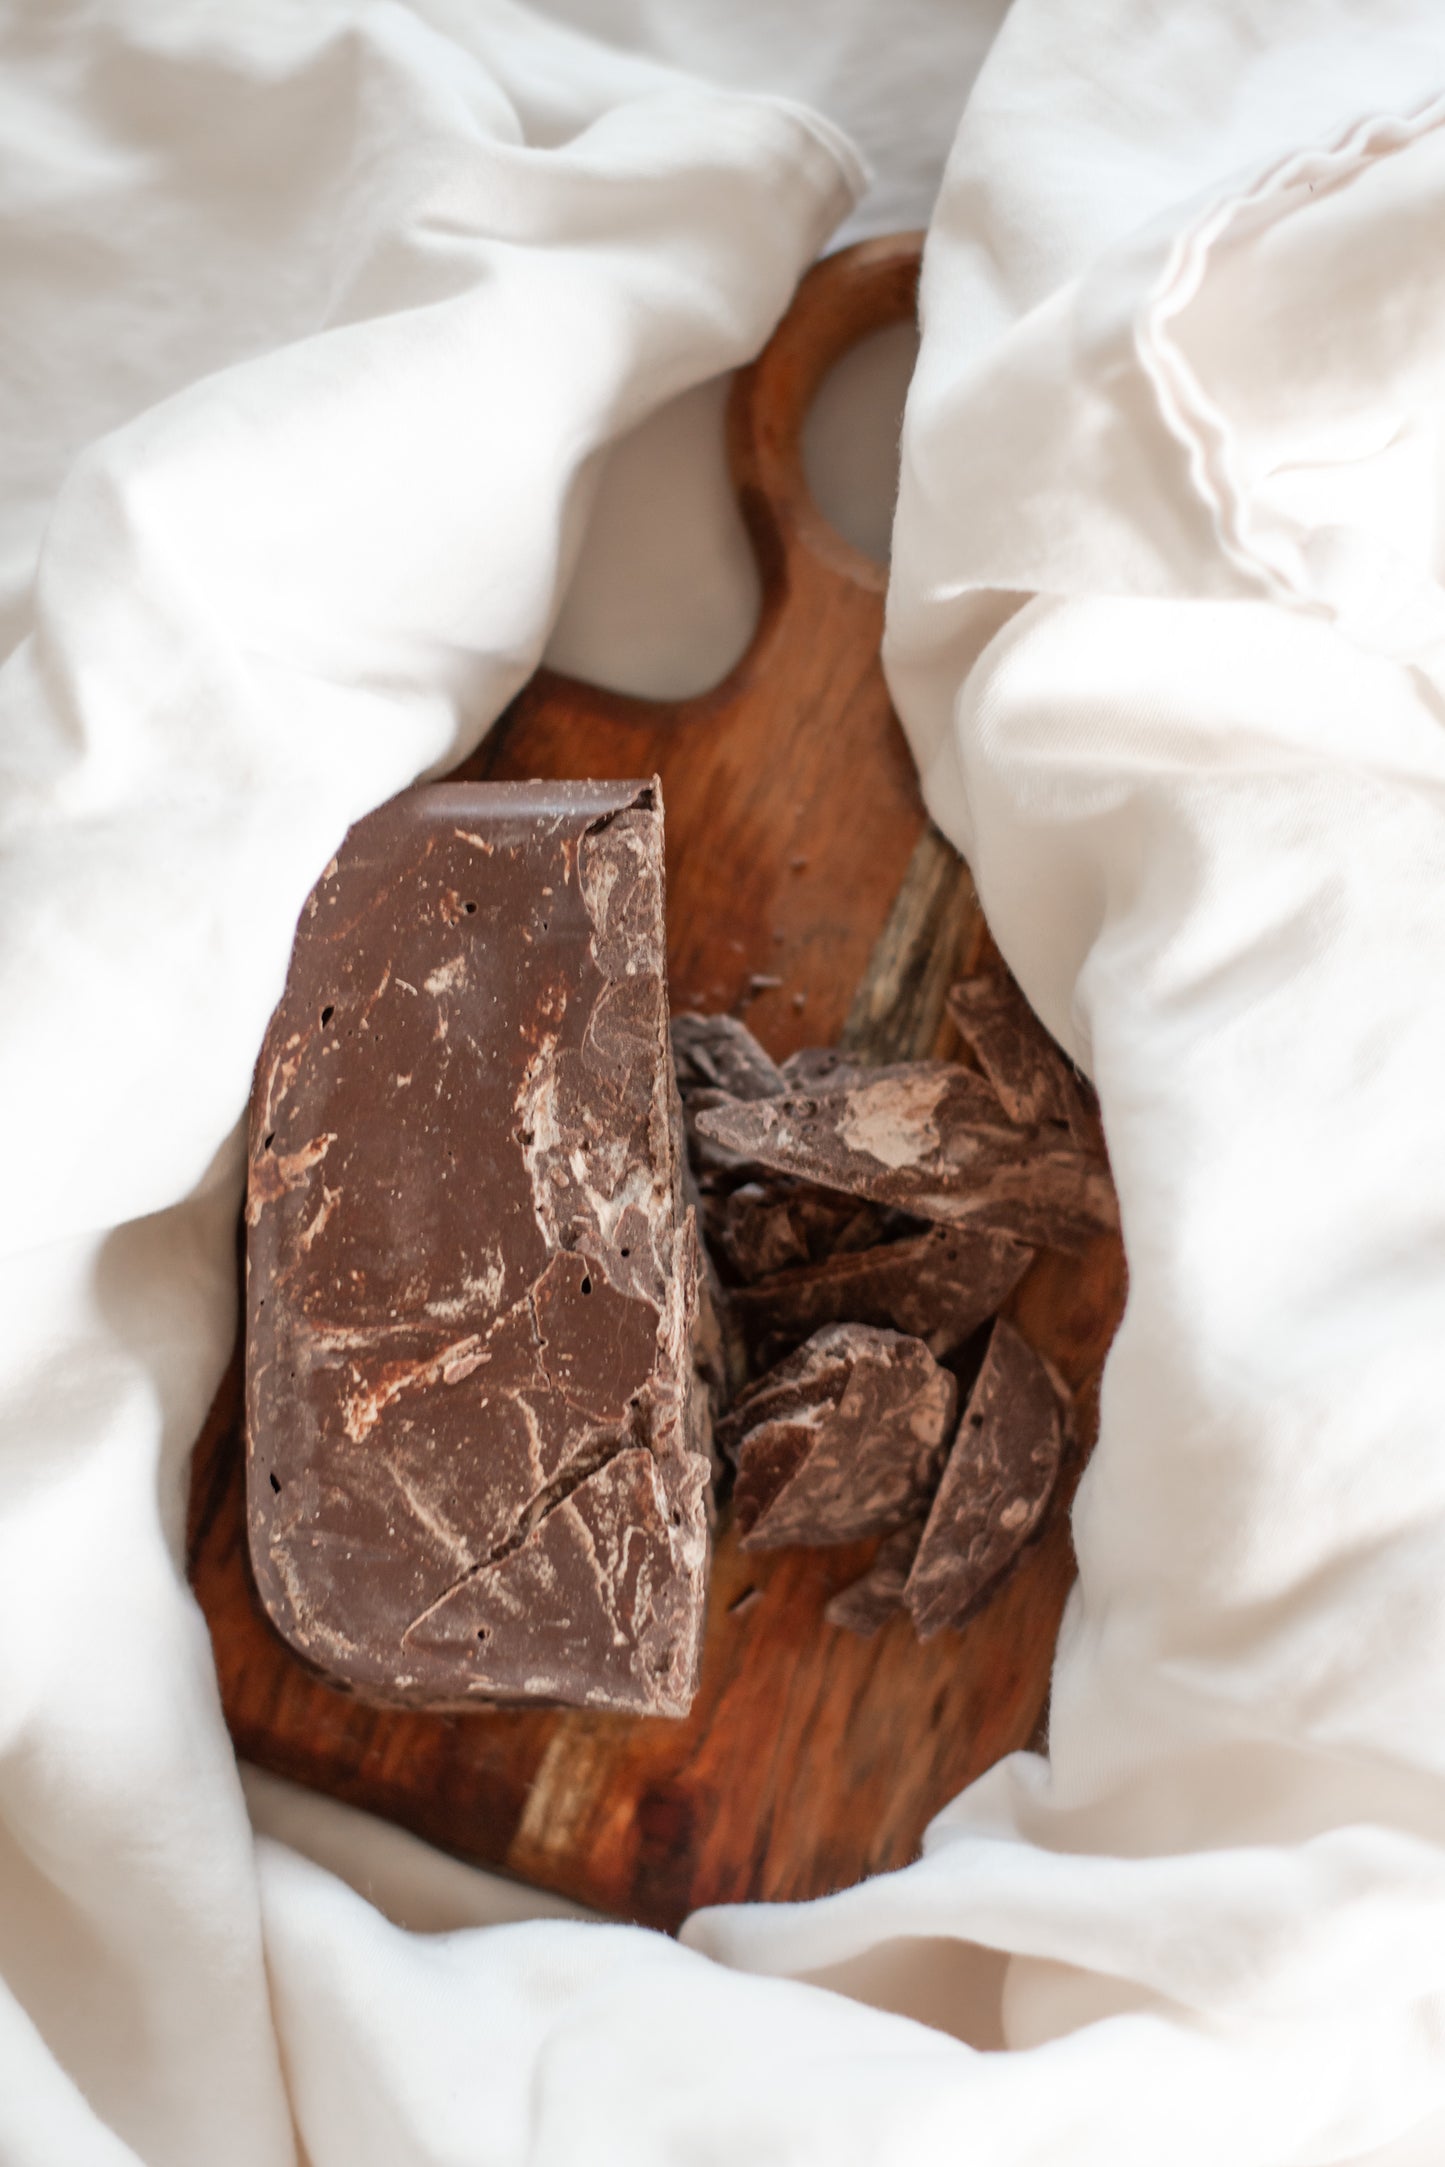 NEW: Maia Raices 100% Ceremoniell Cacao block, 454 gr